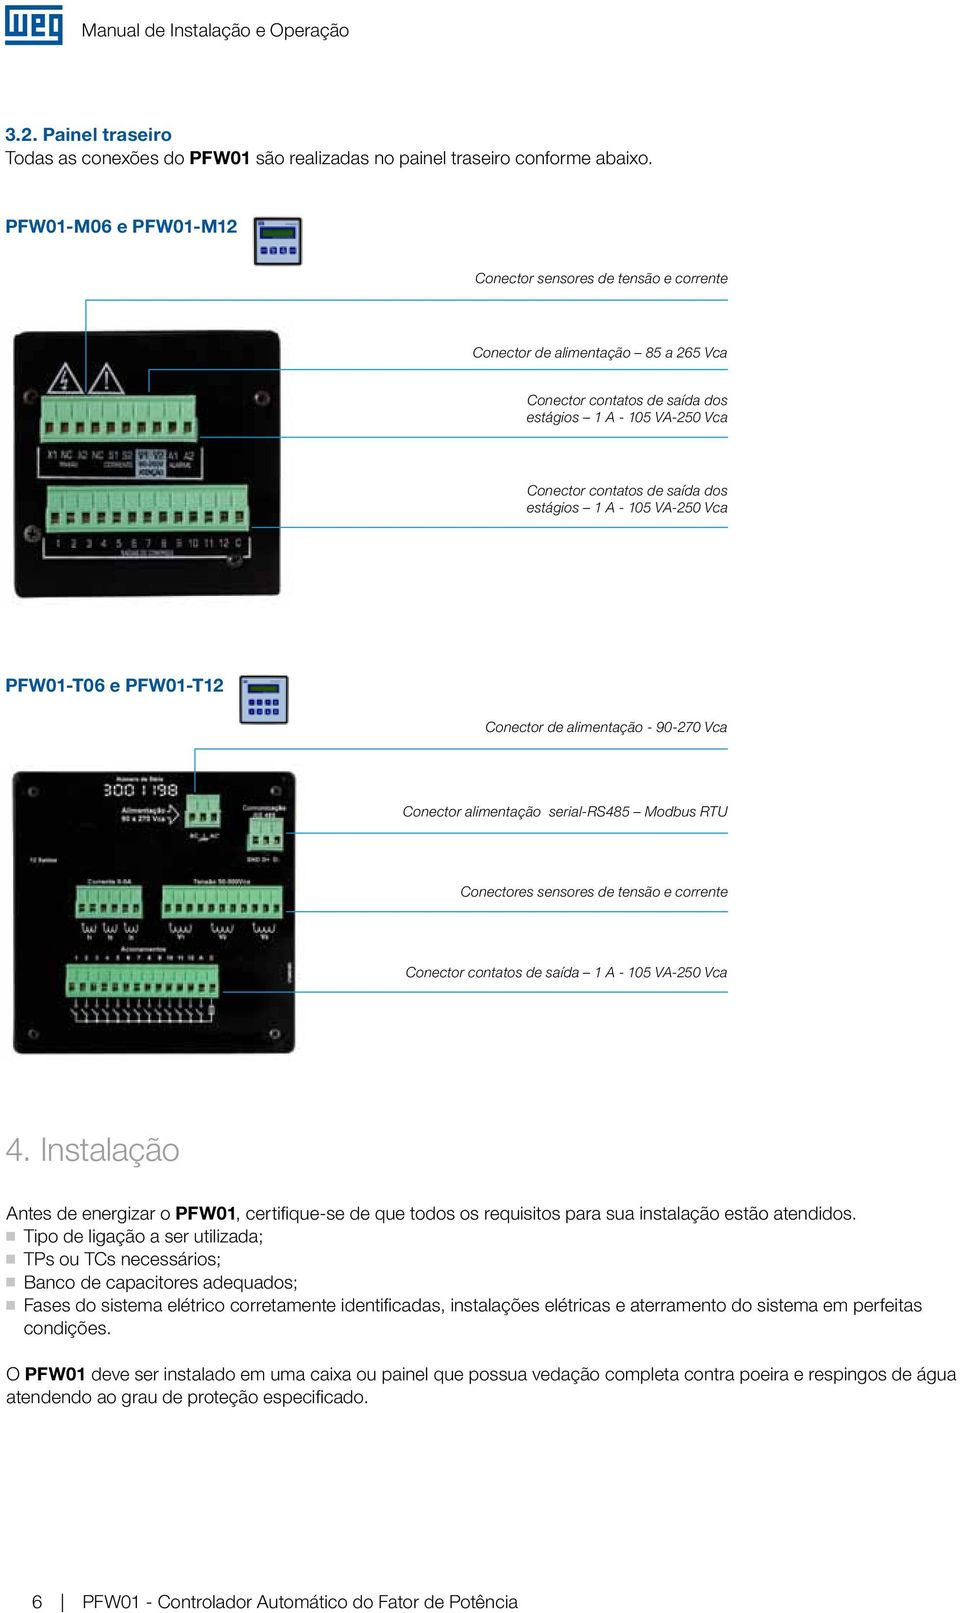 1 A - 105 VA-250 Vca PFW01-T06 e PFW01-T12 Conector de alimentação - 90-270 Vca Conector alimentação serial-rs485 Modbus RTU Conectores sensores de tensão e corrente Conector contatos de saída 1 A -